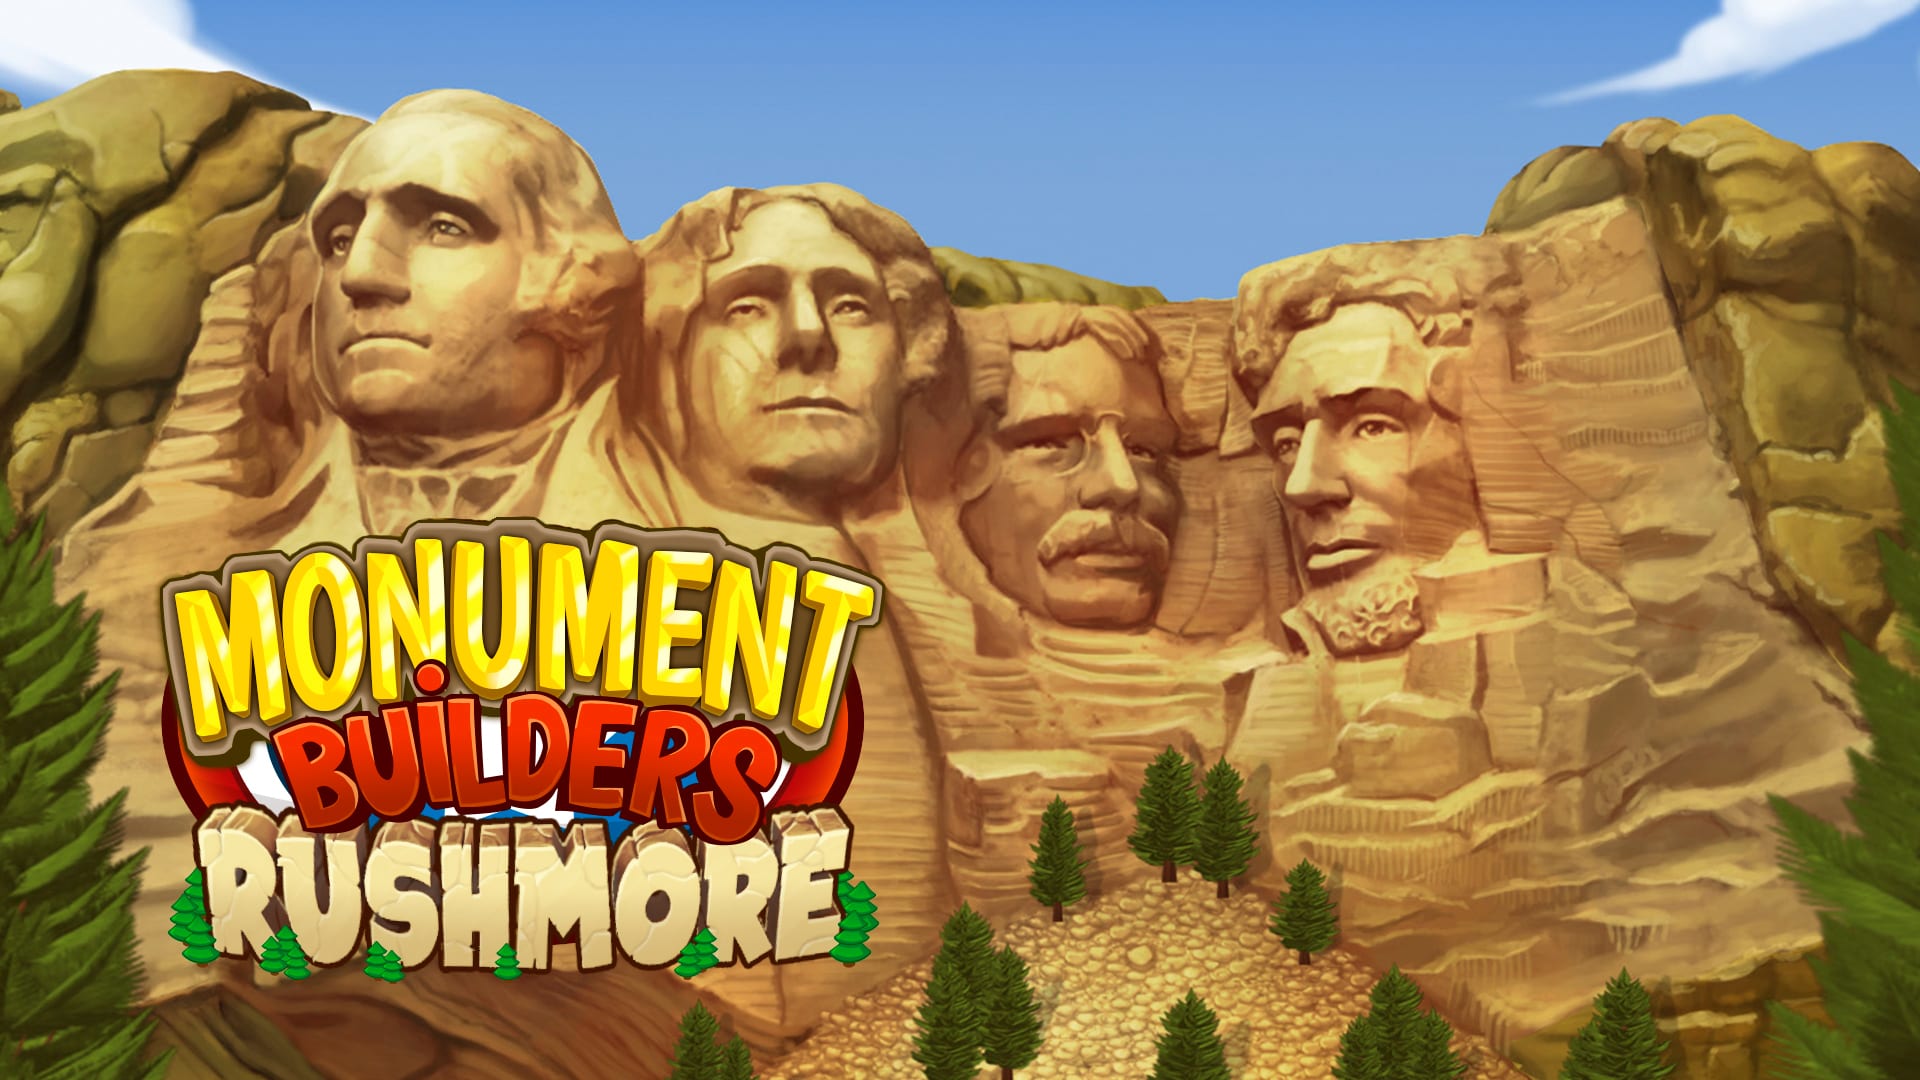 Monument Builders Rushmore 1